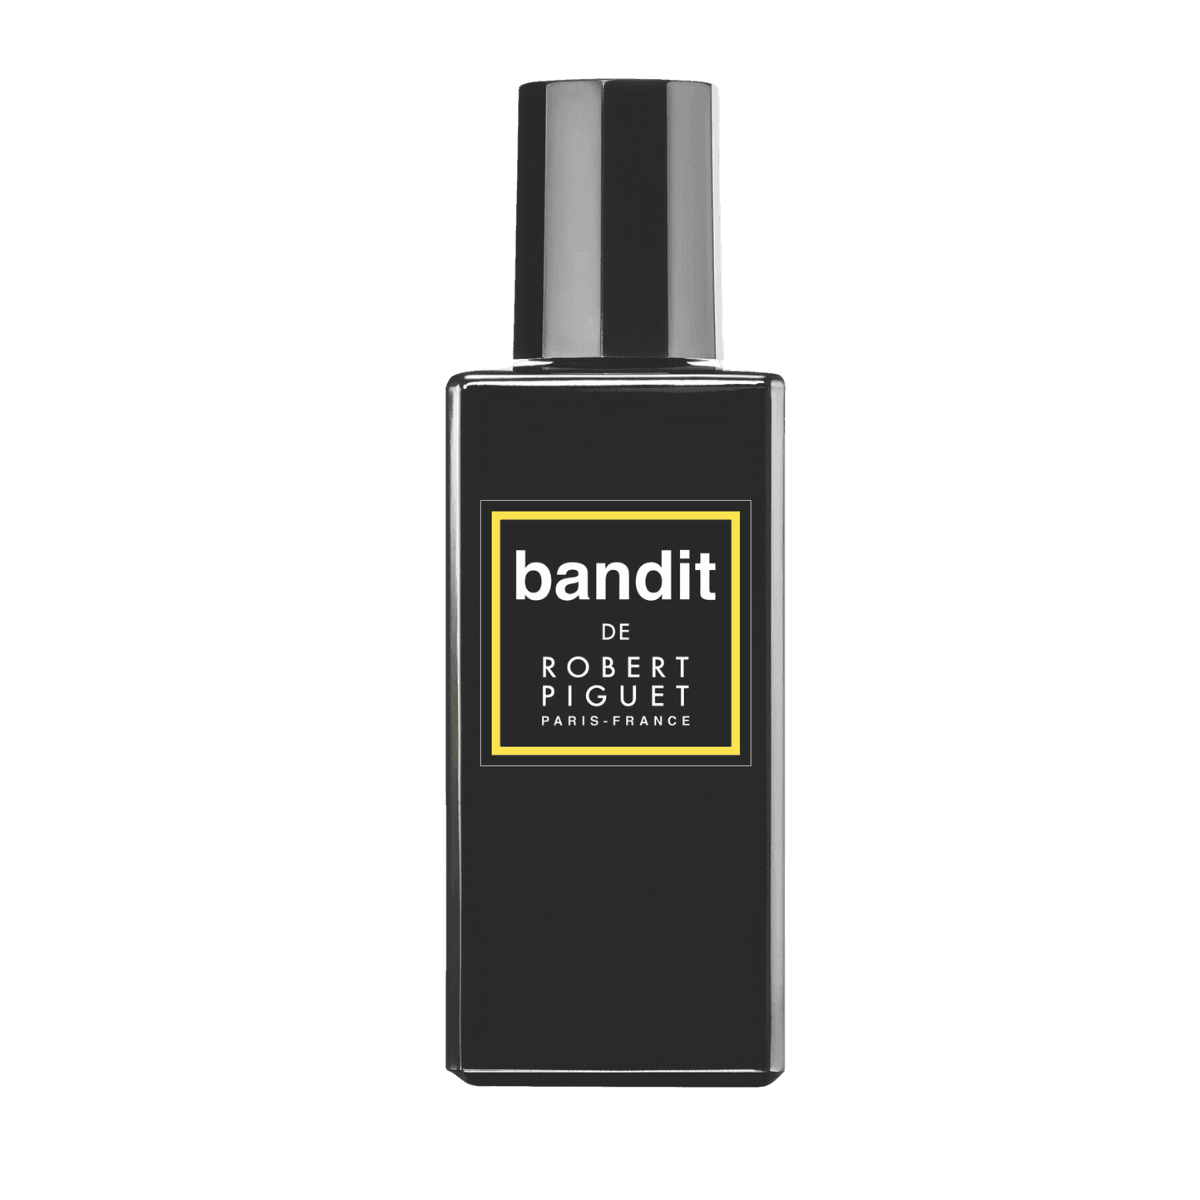 Image of Bandit eau de parfum 100 ml by the perfume brand Robert Piguet